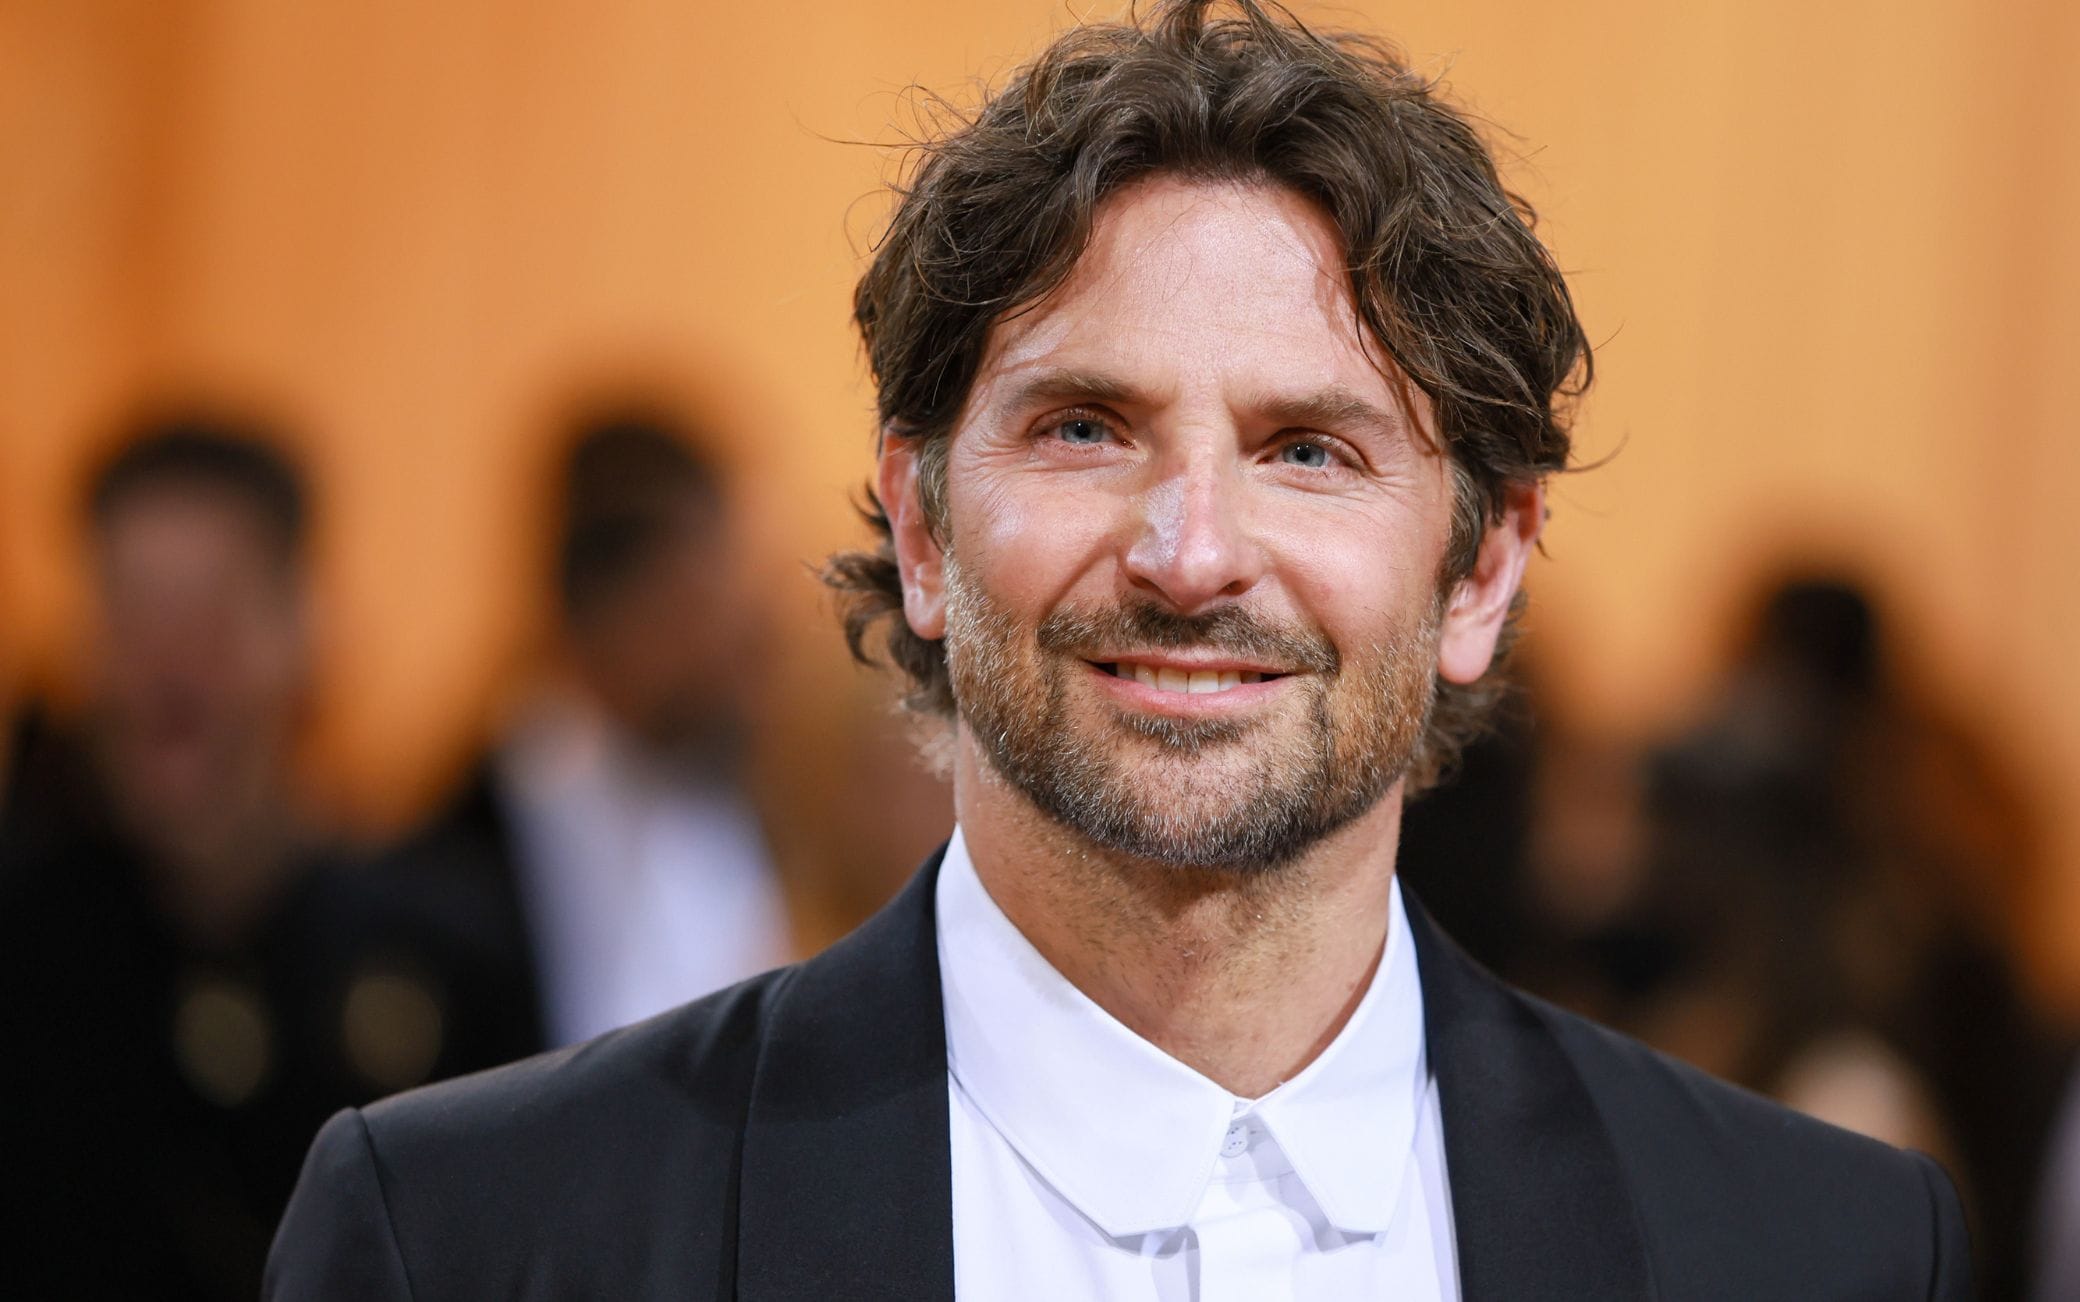 Bradley Cooper sarà Frank Bullit nel nuovo film di Steven Spielberg